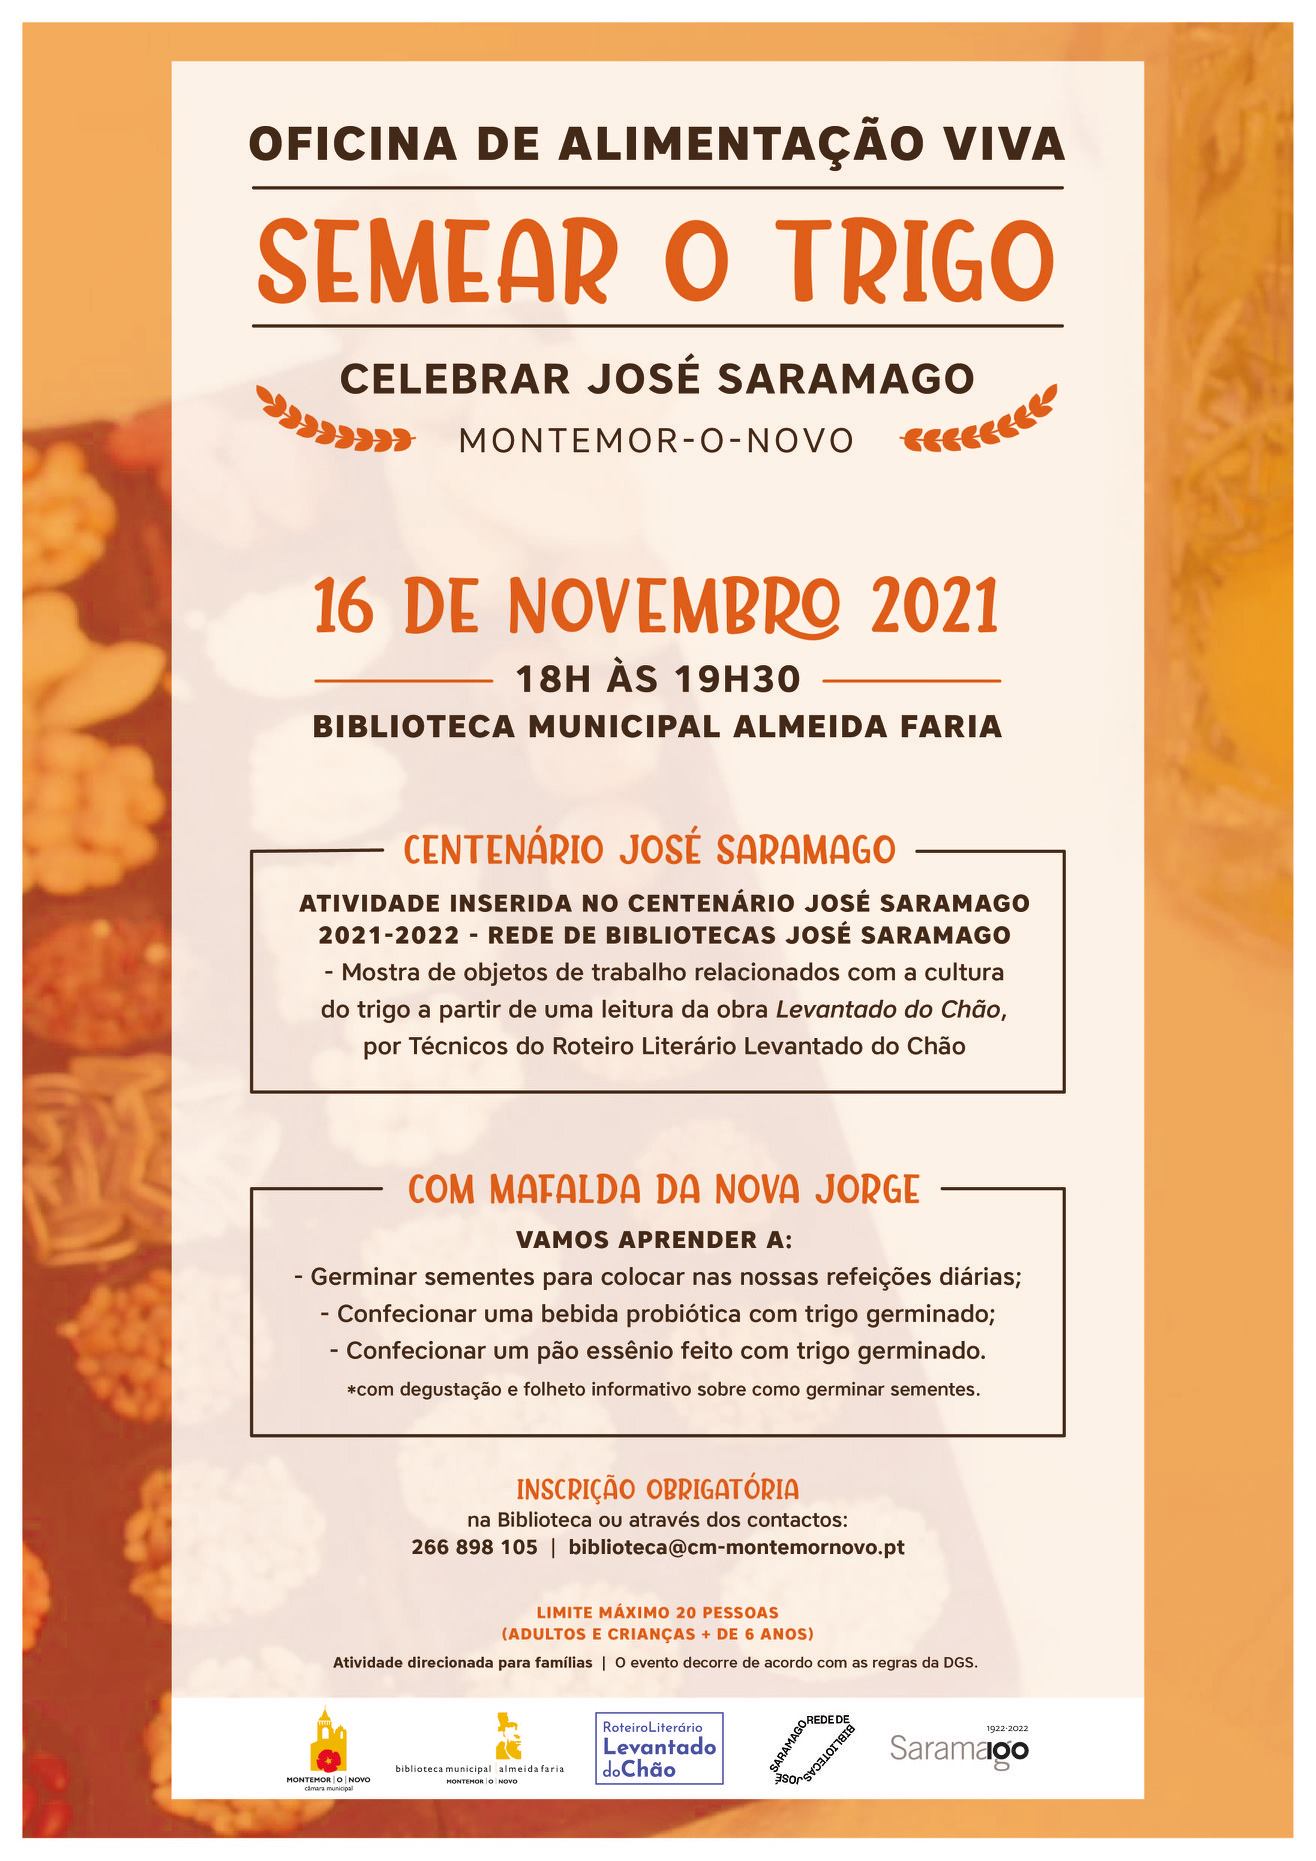 Semear o Trigo – Celebrar José Saramago, Biblioteca Municipal Almeida Faria, Montemor-o-Novo, 16 Novembro 2021